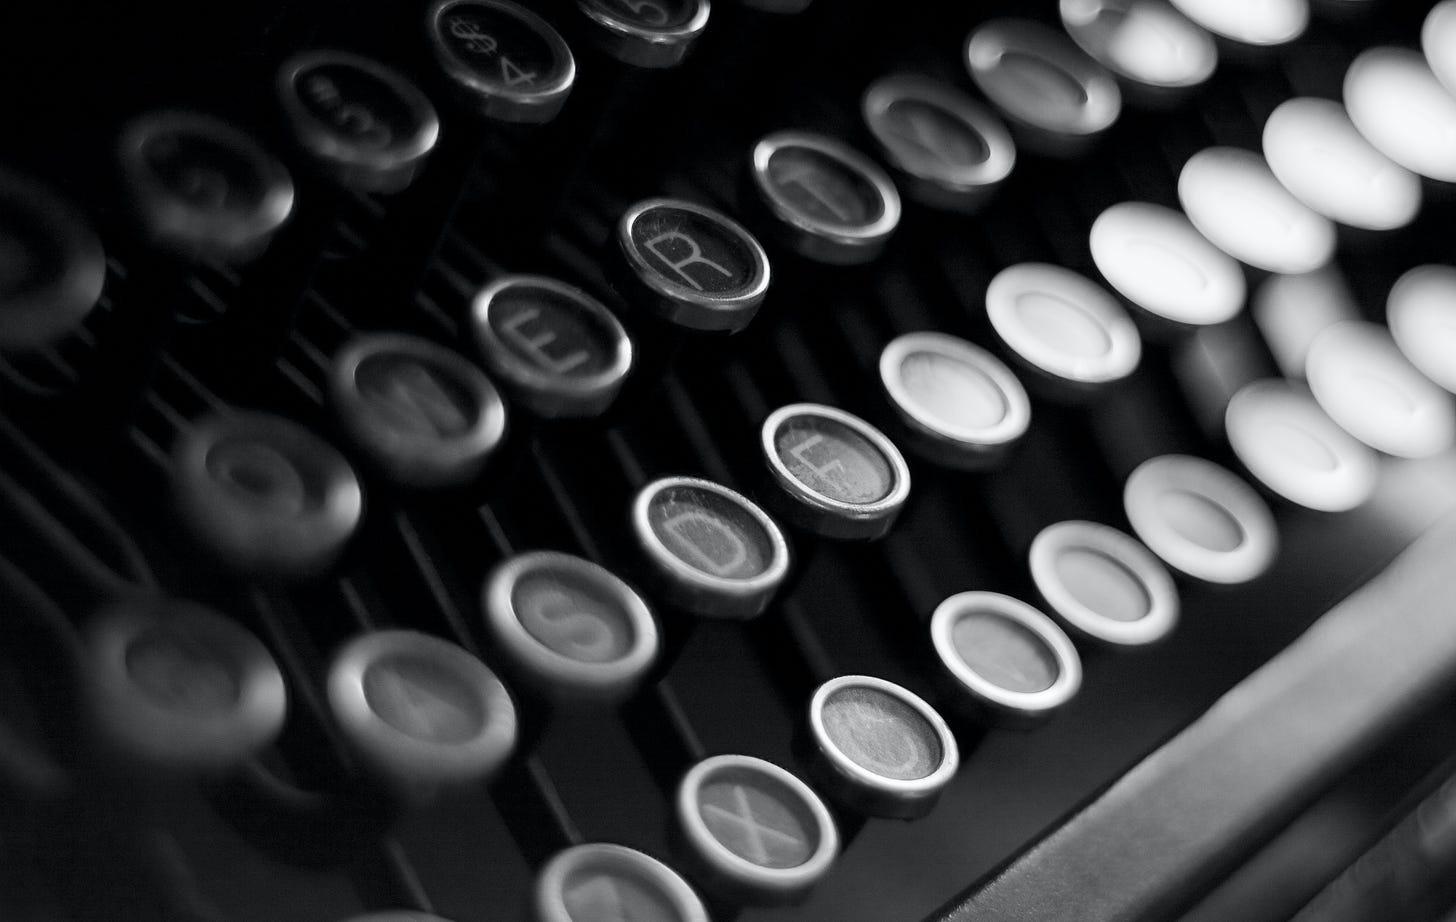 black and white photo of a typewriter keyboard